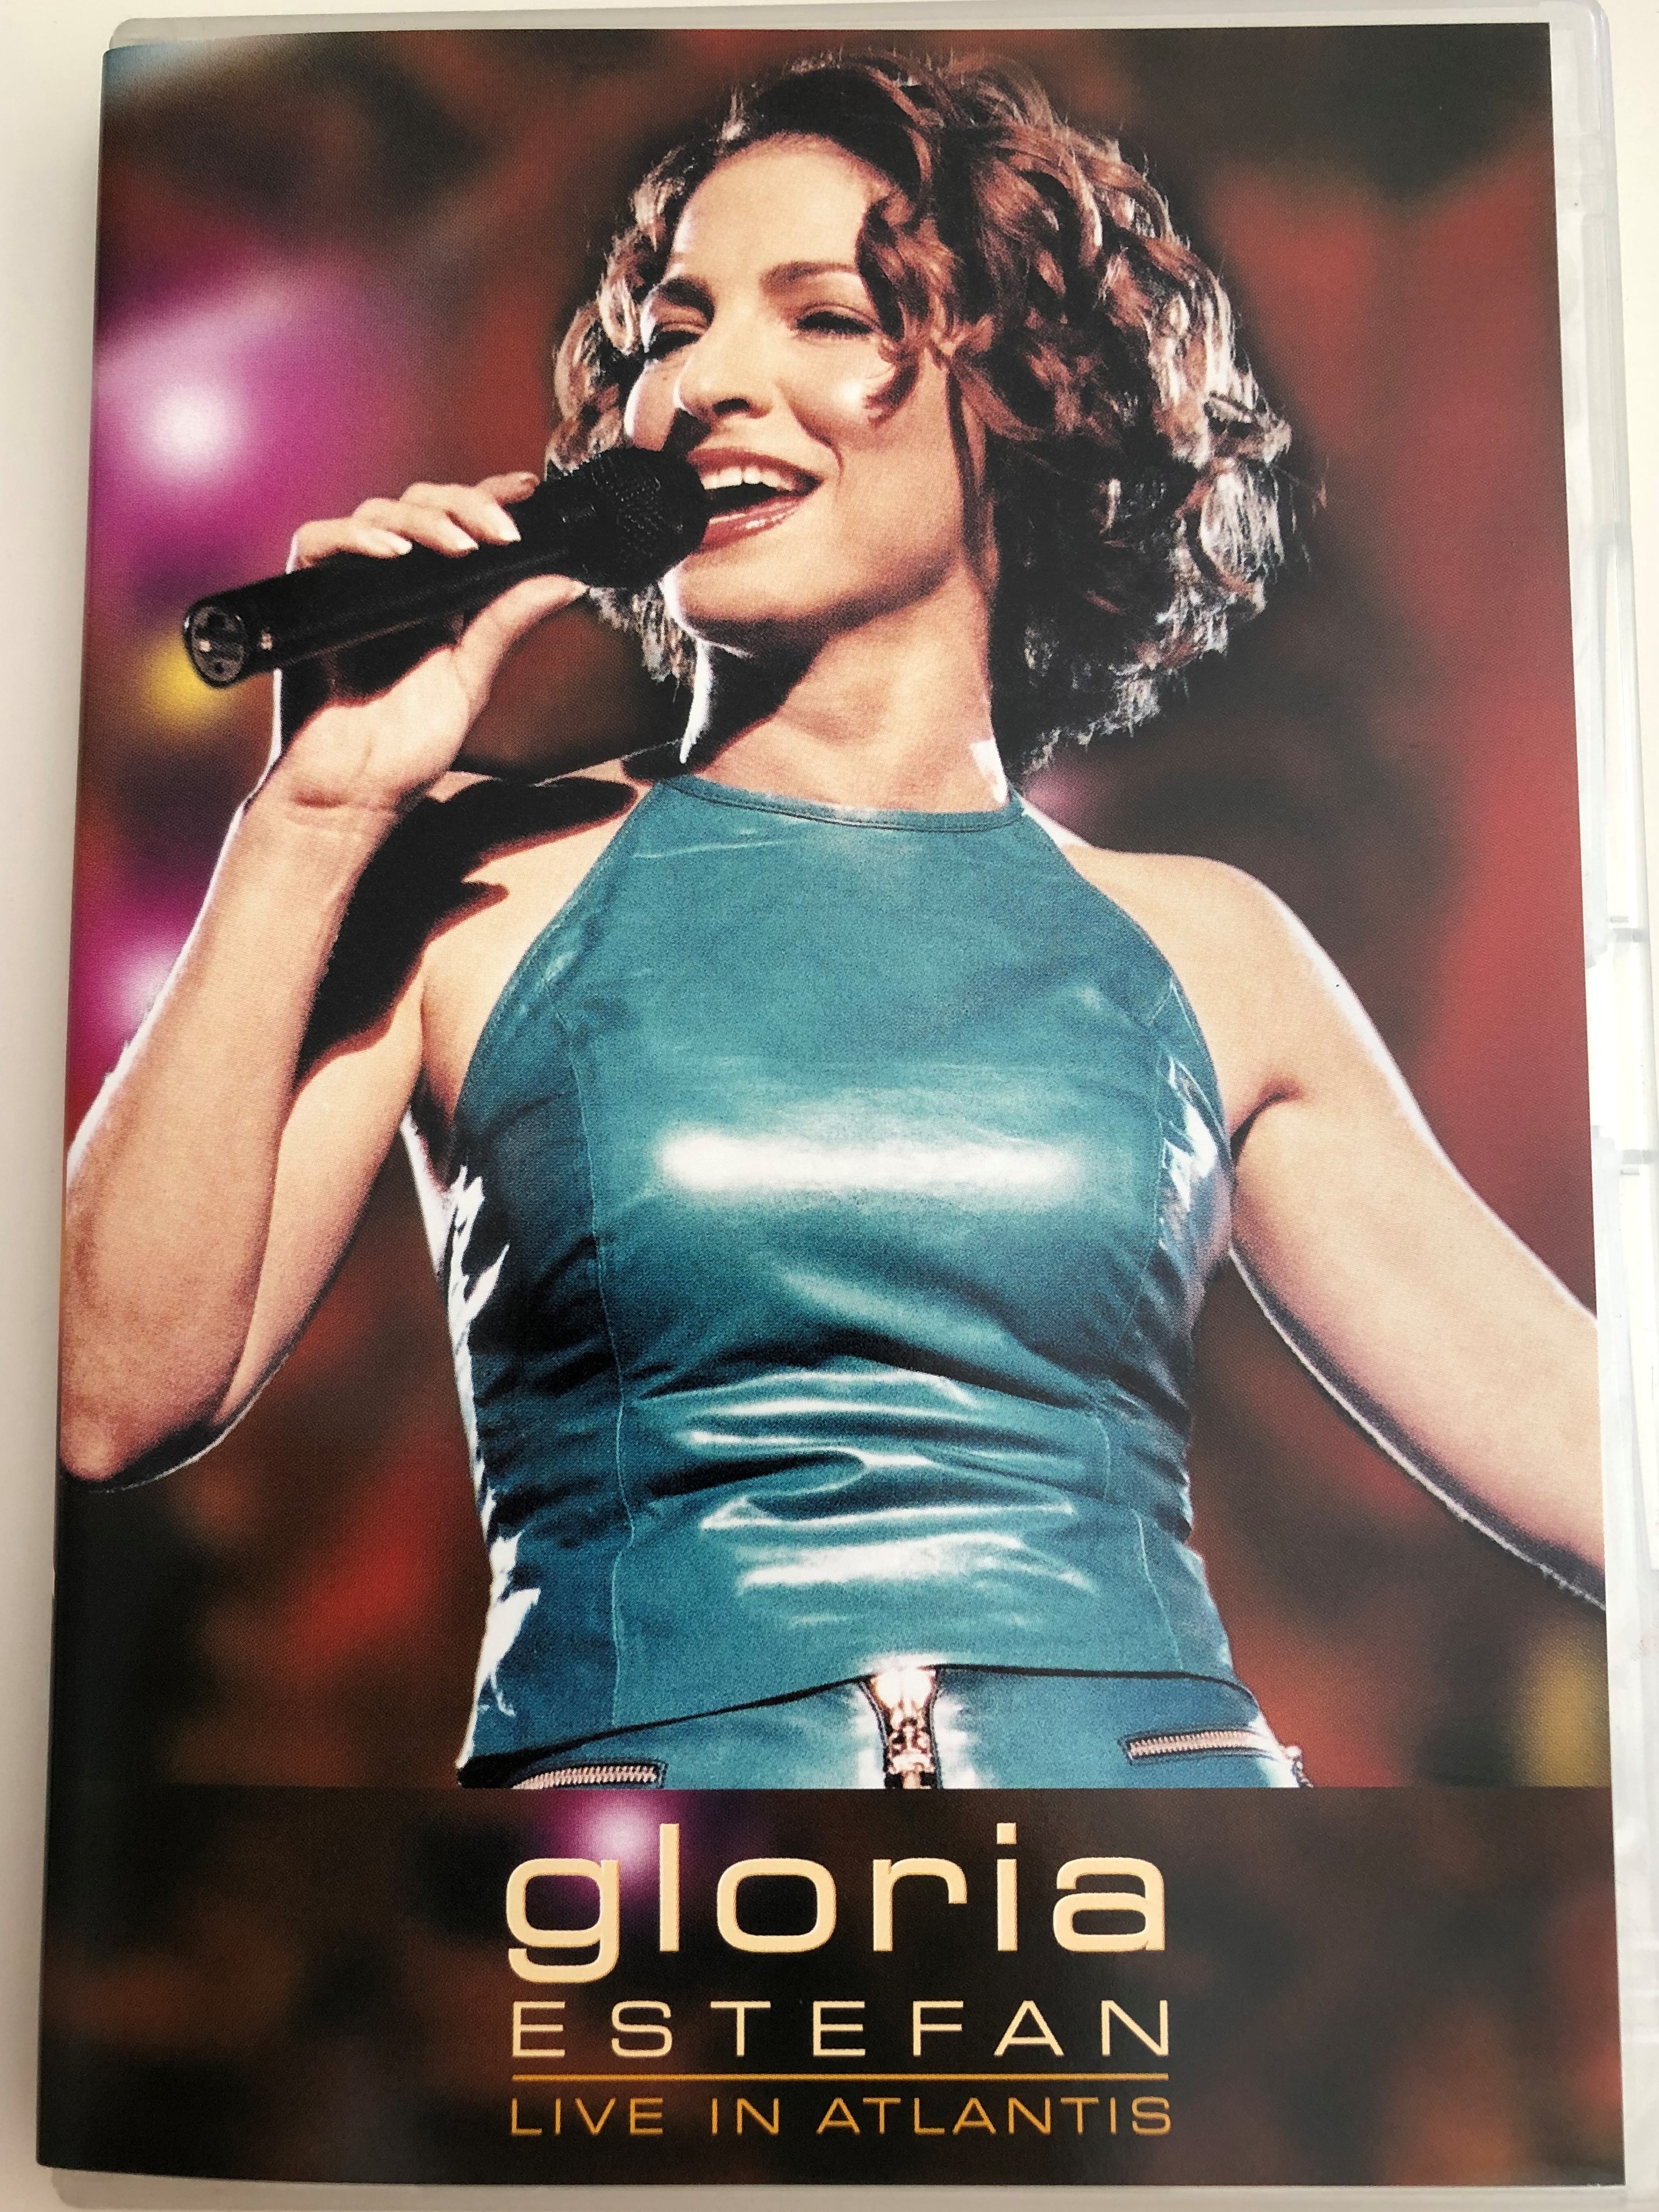 gloria-estefan-live-in-atlantis-dvd-2002-biography-complete-discography-conga-get-on-your-feet-mi-tierra-smv-50242-9-1-.jpg